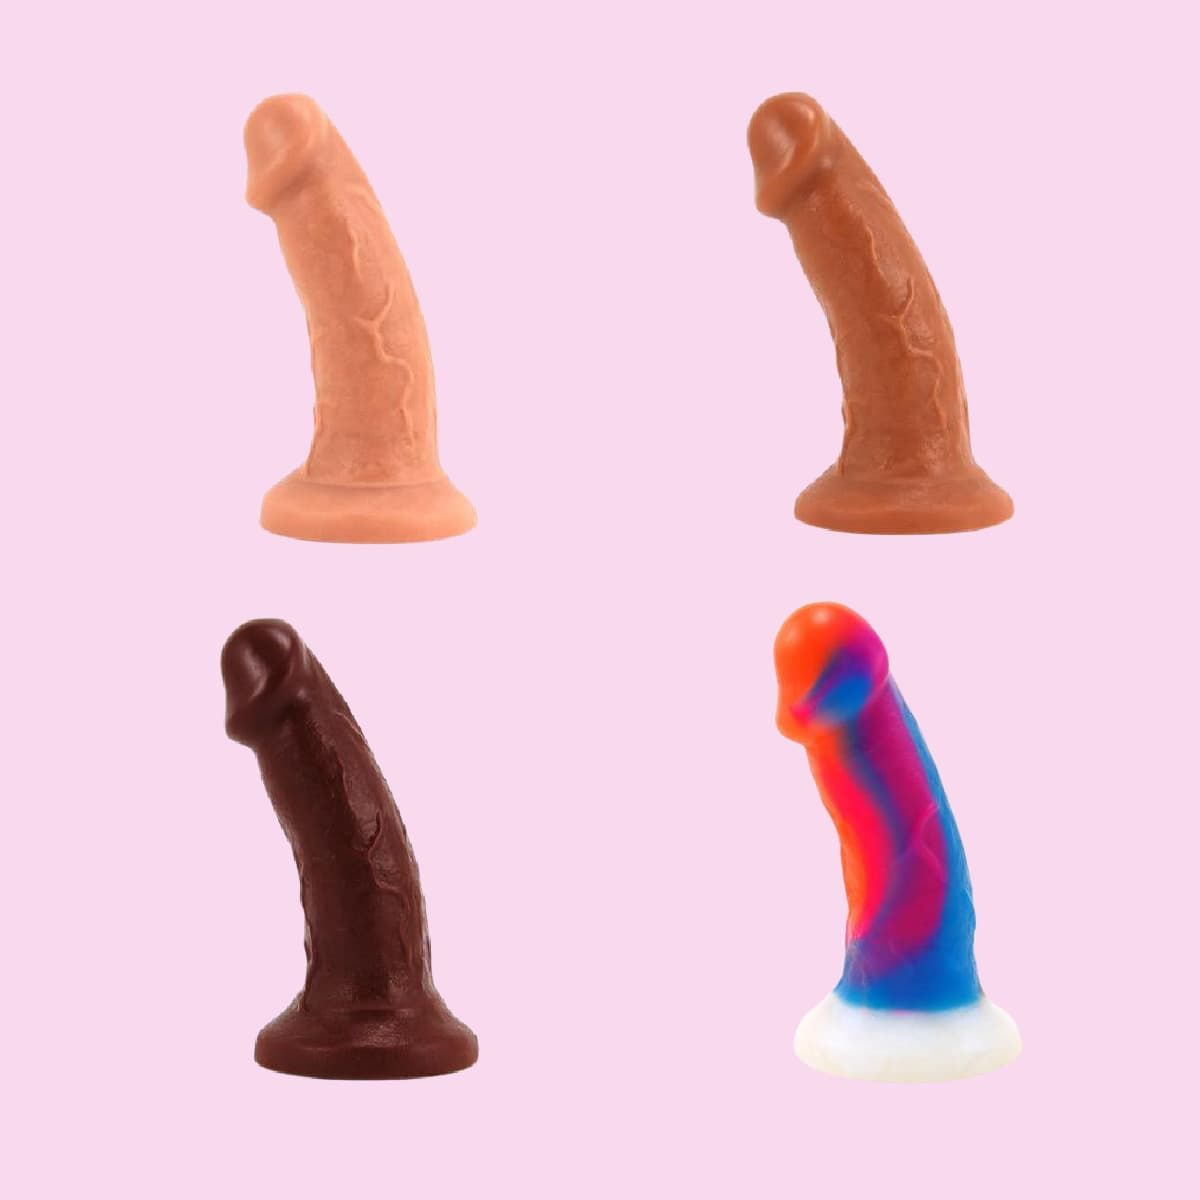 Soft Huge Double Dildos double penetration strap on Dildo Skin Feel Sex Toys